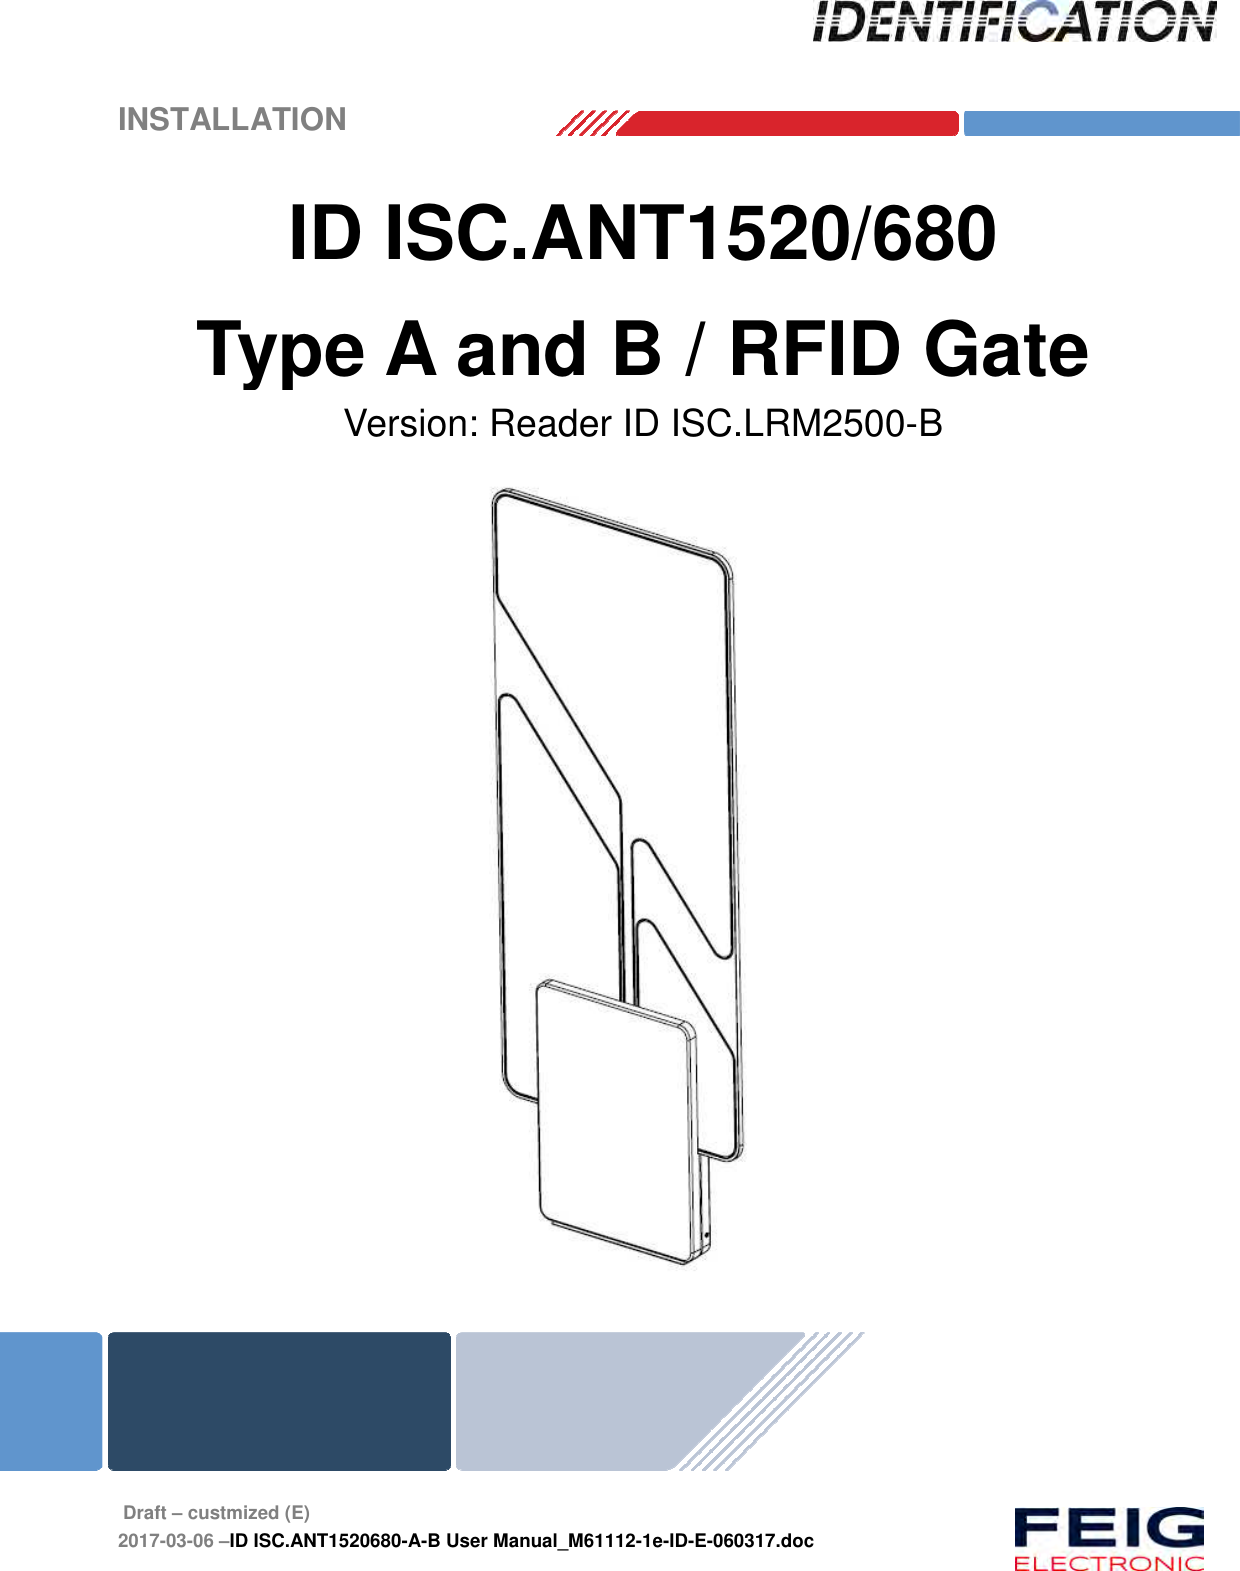    INSTALLATION   Draft – custmized (E) 2017-03-06 –ID ISC.ANT1520680-A-B User Manual_M61112-1e-ID-E-060317.doc   ID ISC.ANT1520/680 Type A and B / RFID Gate  Version: Reader ID ISC.LRM2500-B   